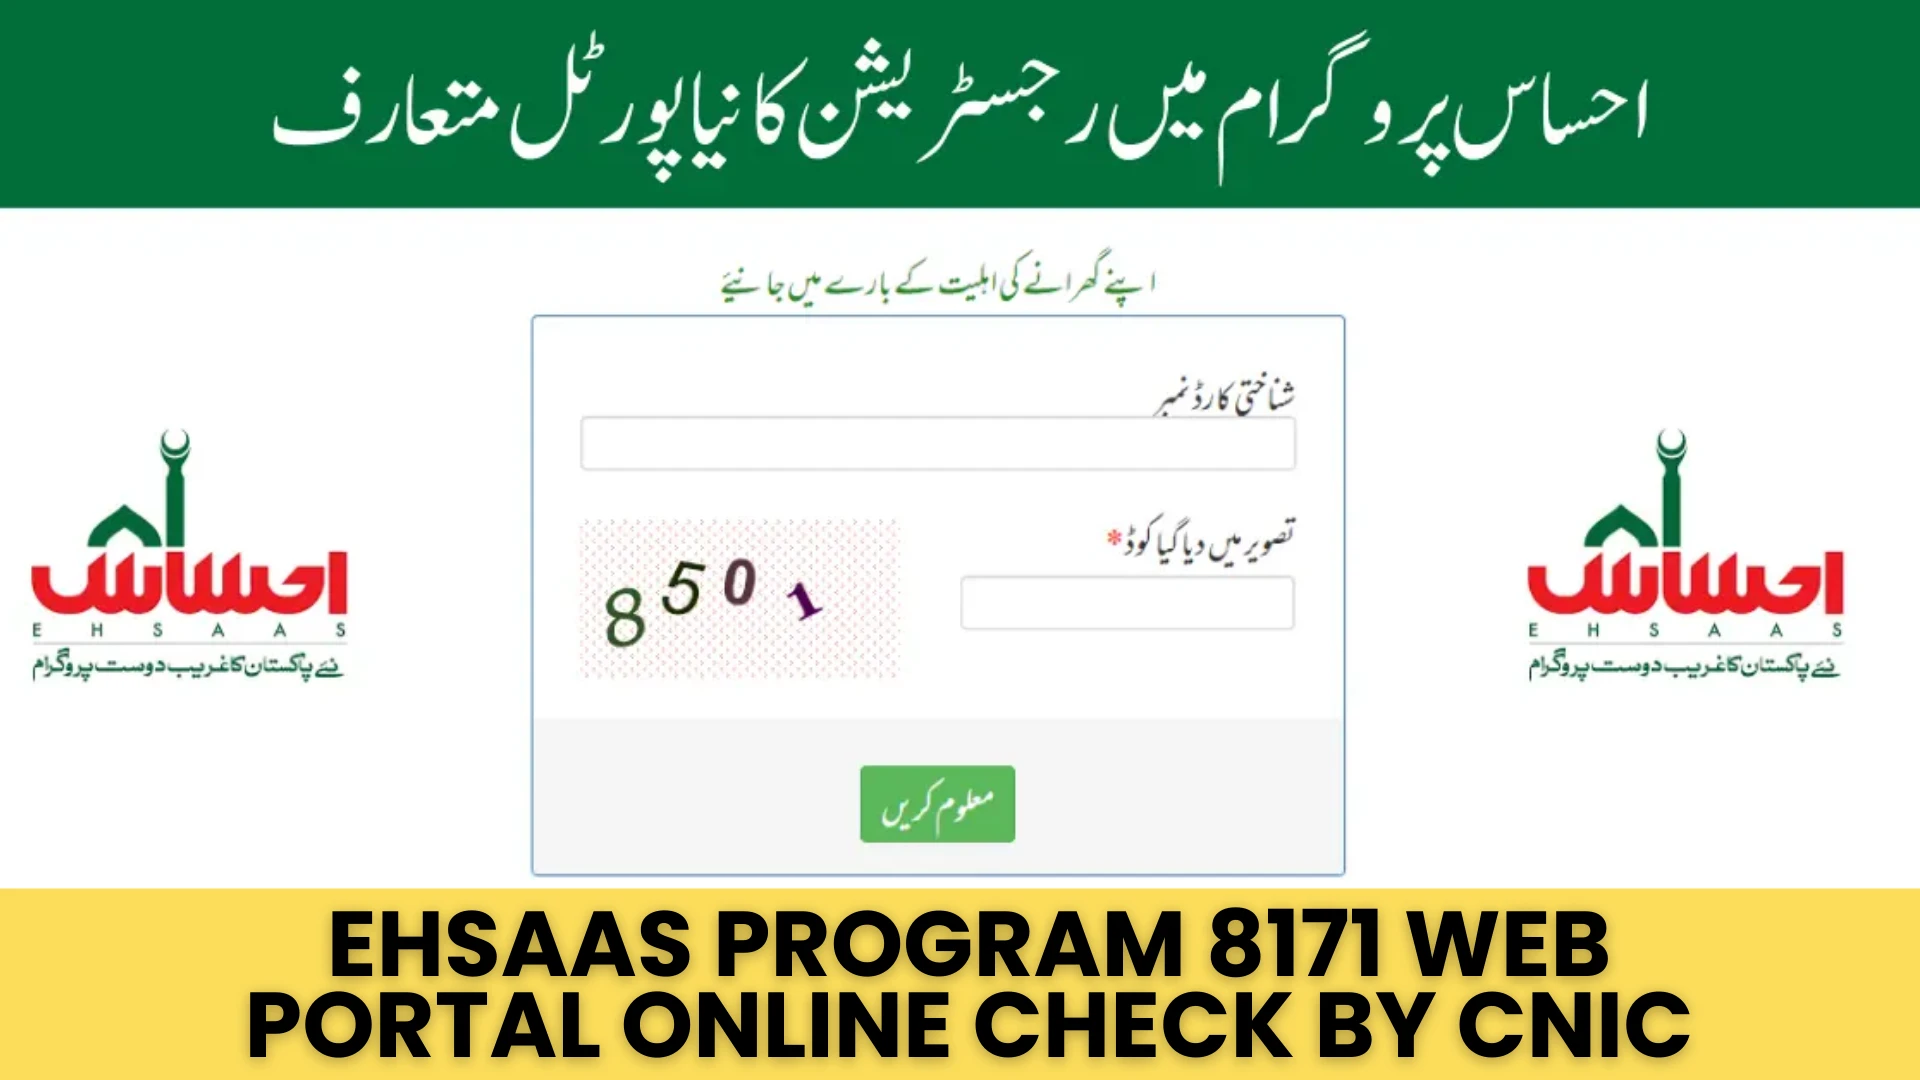 Ehsaas Program 8171 Web Portal Online Check by CNIC